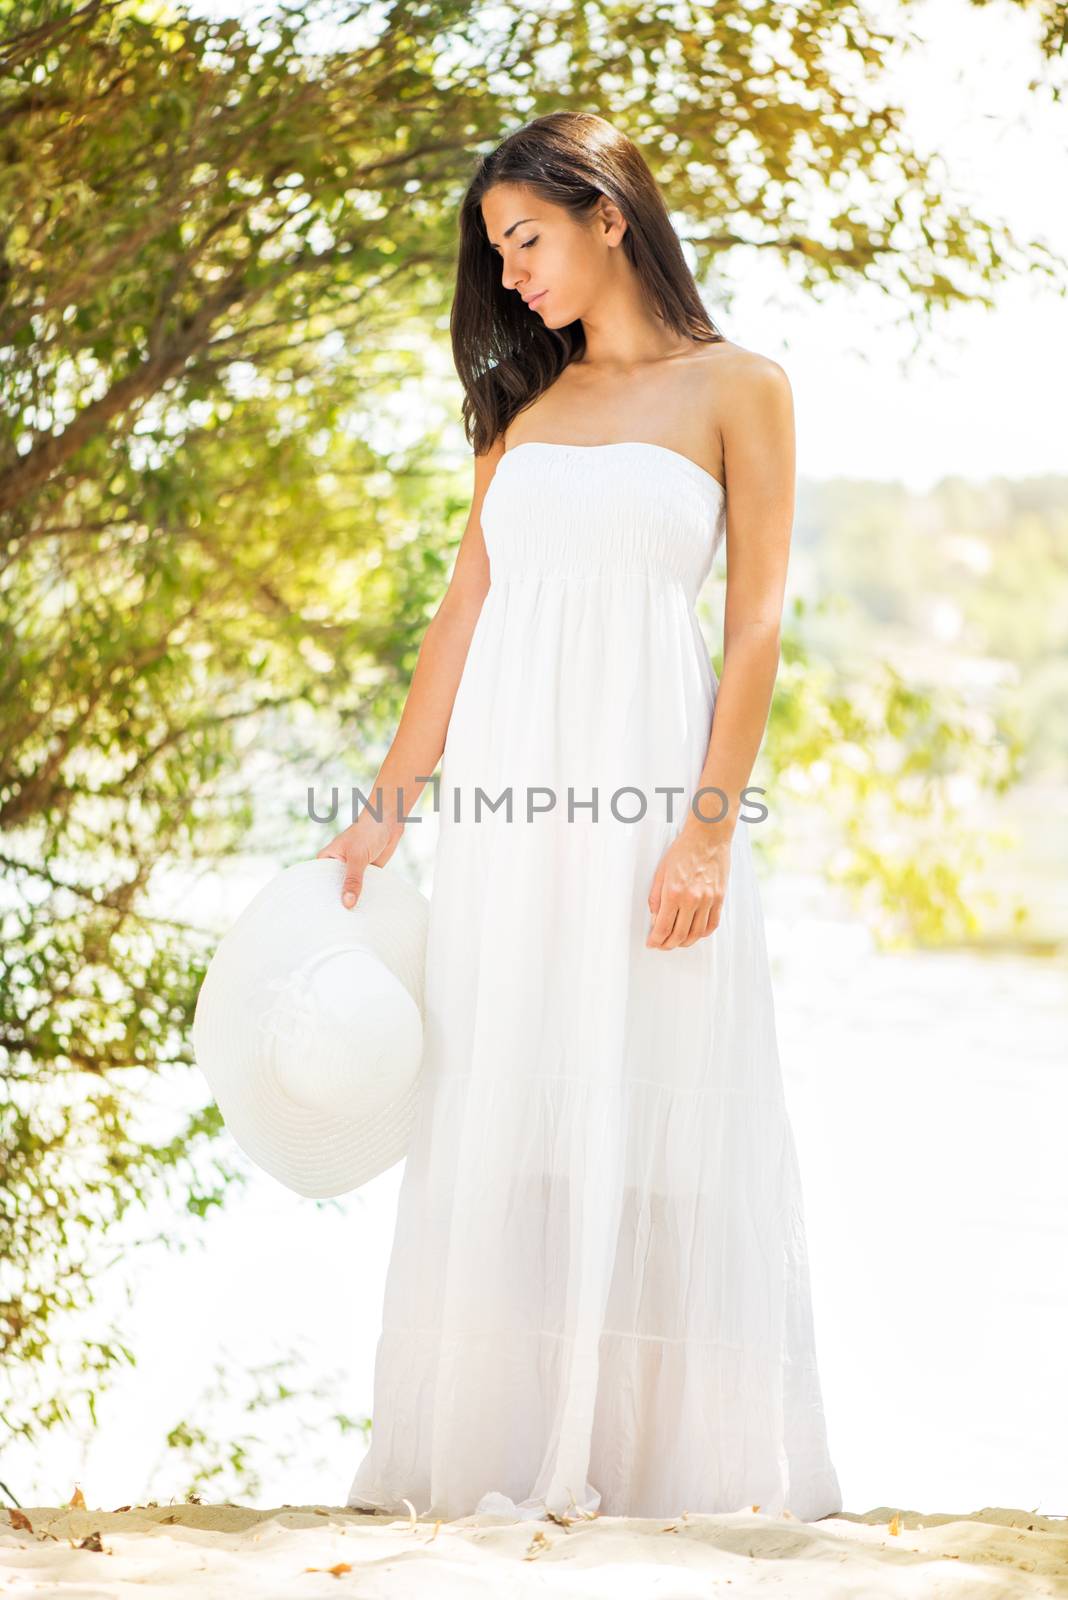 Beautiful Woman In White Dress by MilanMarkovic78